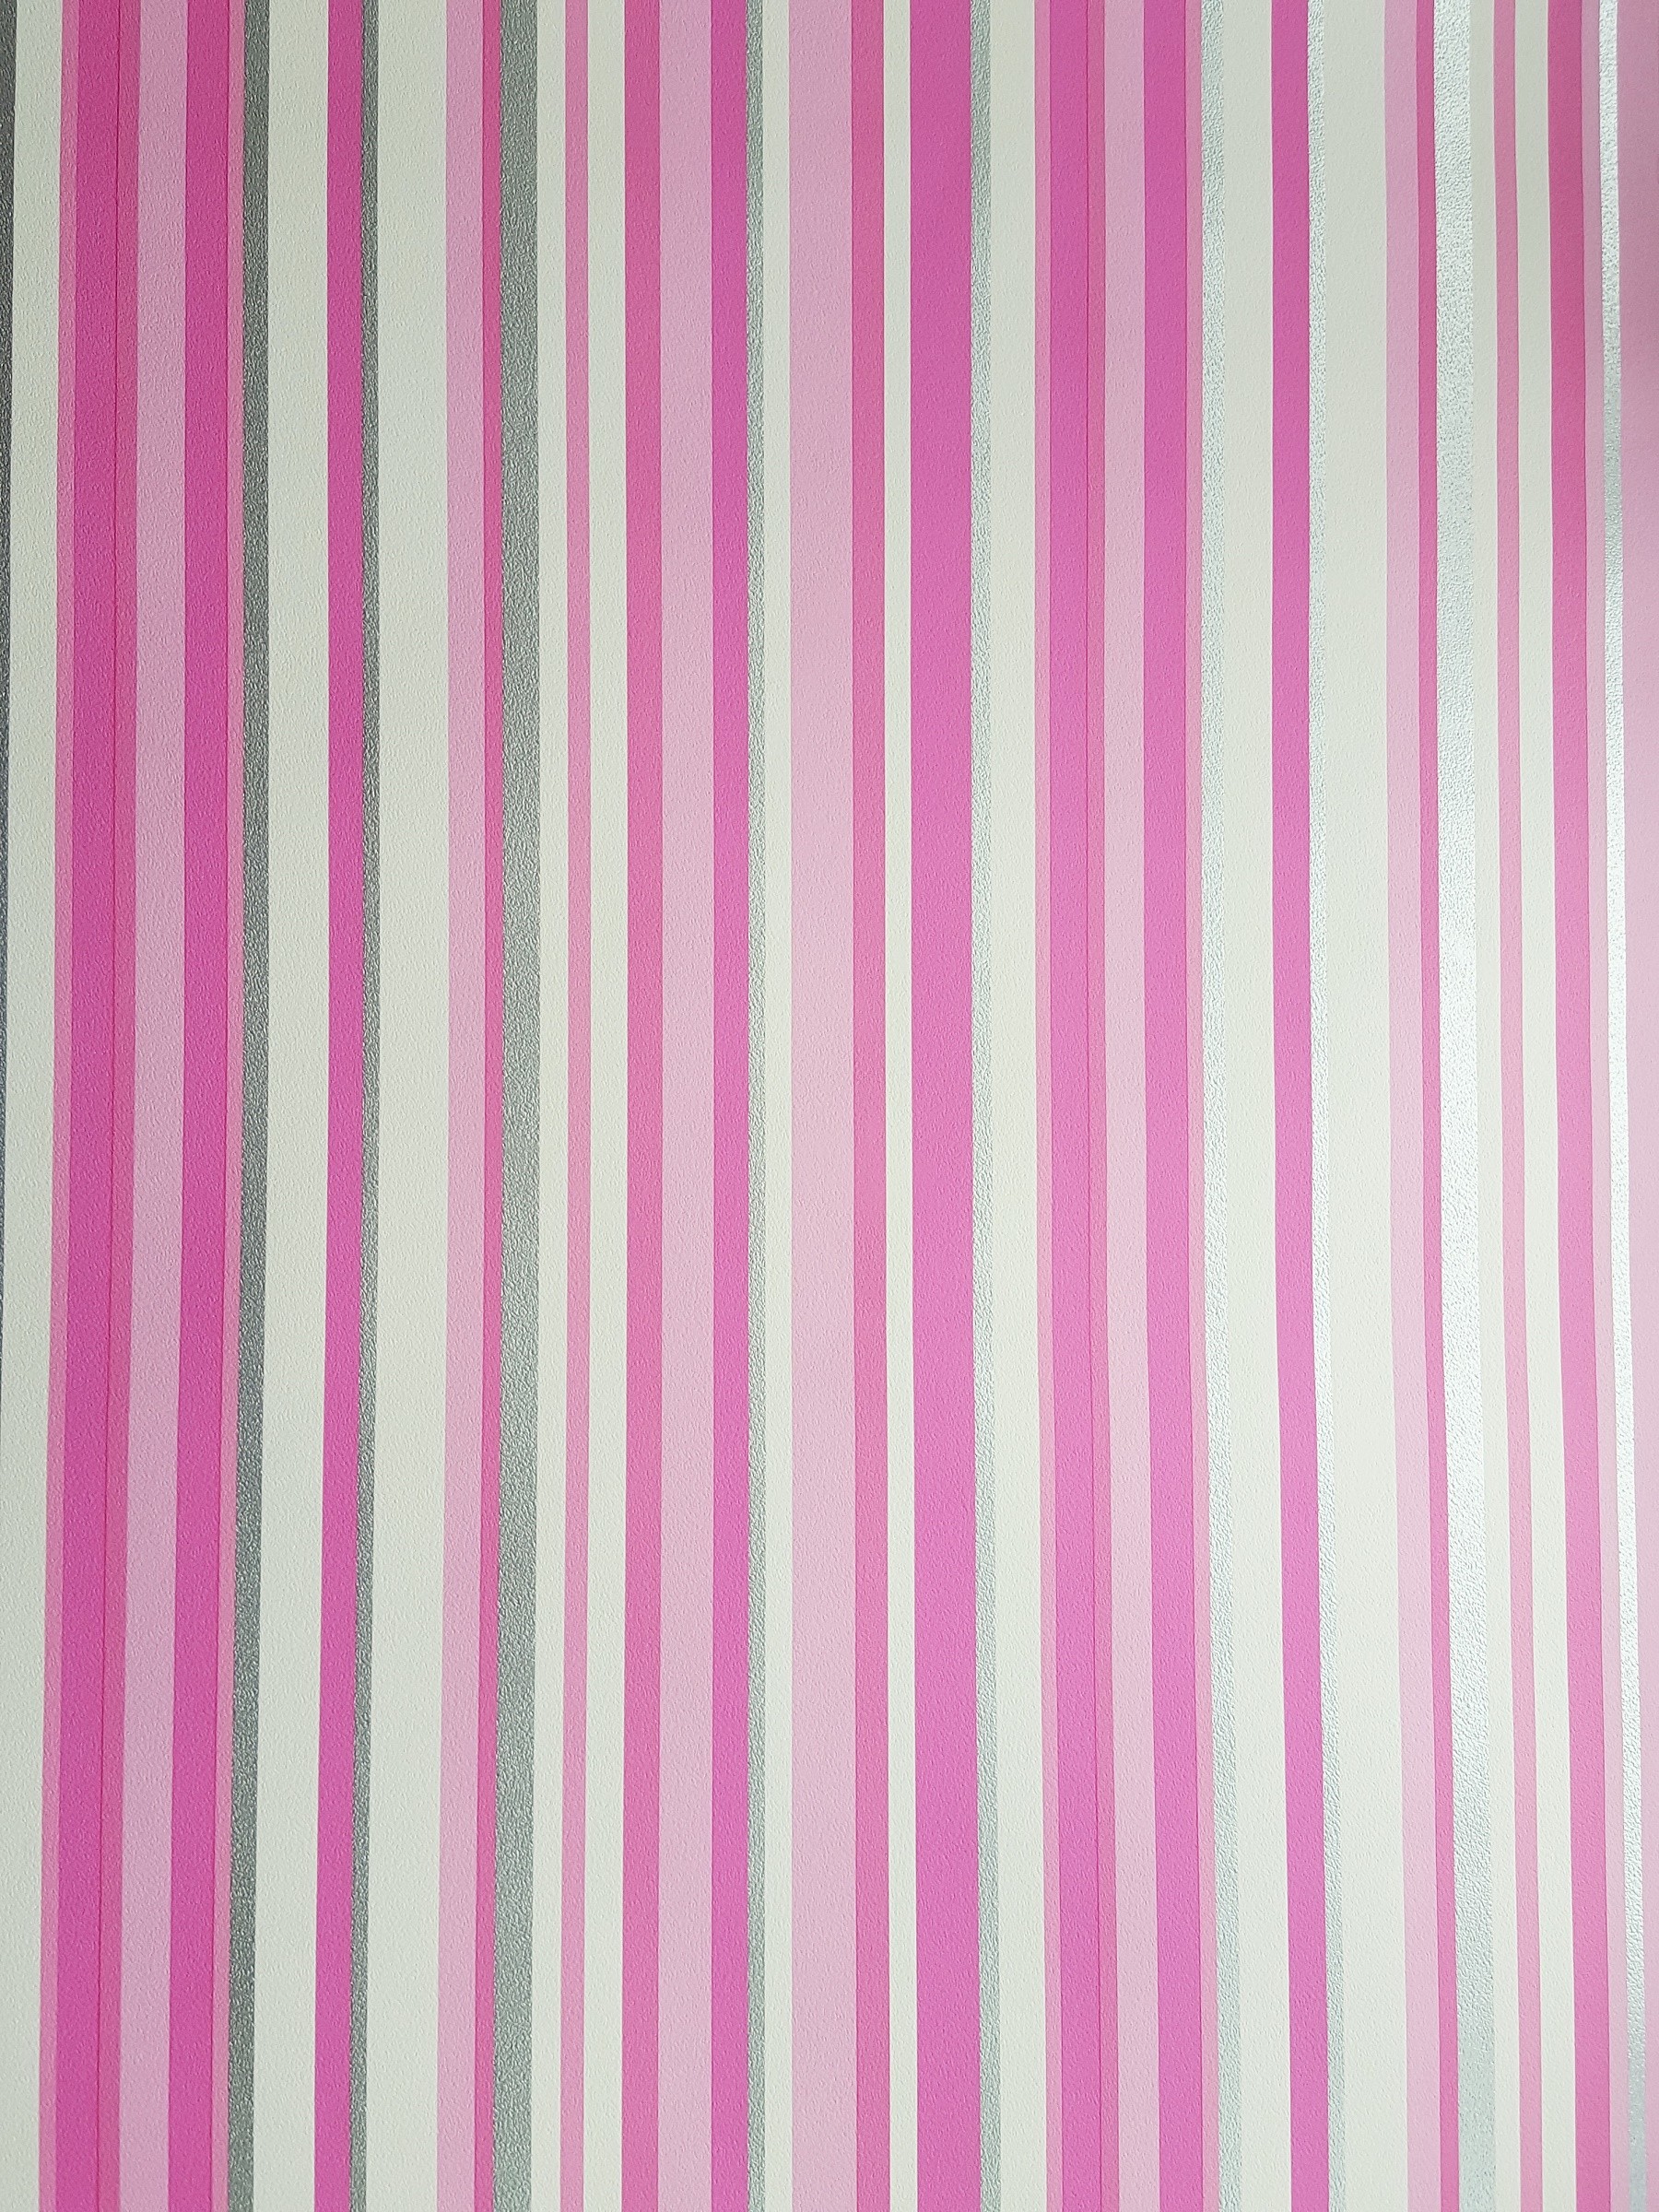 1800x2400 New Trend Girls Pink Silver White Barcode Stripe Wallpaper